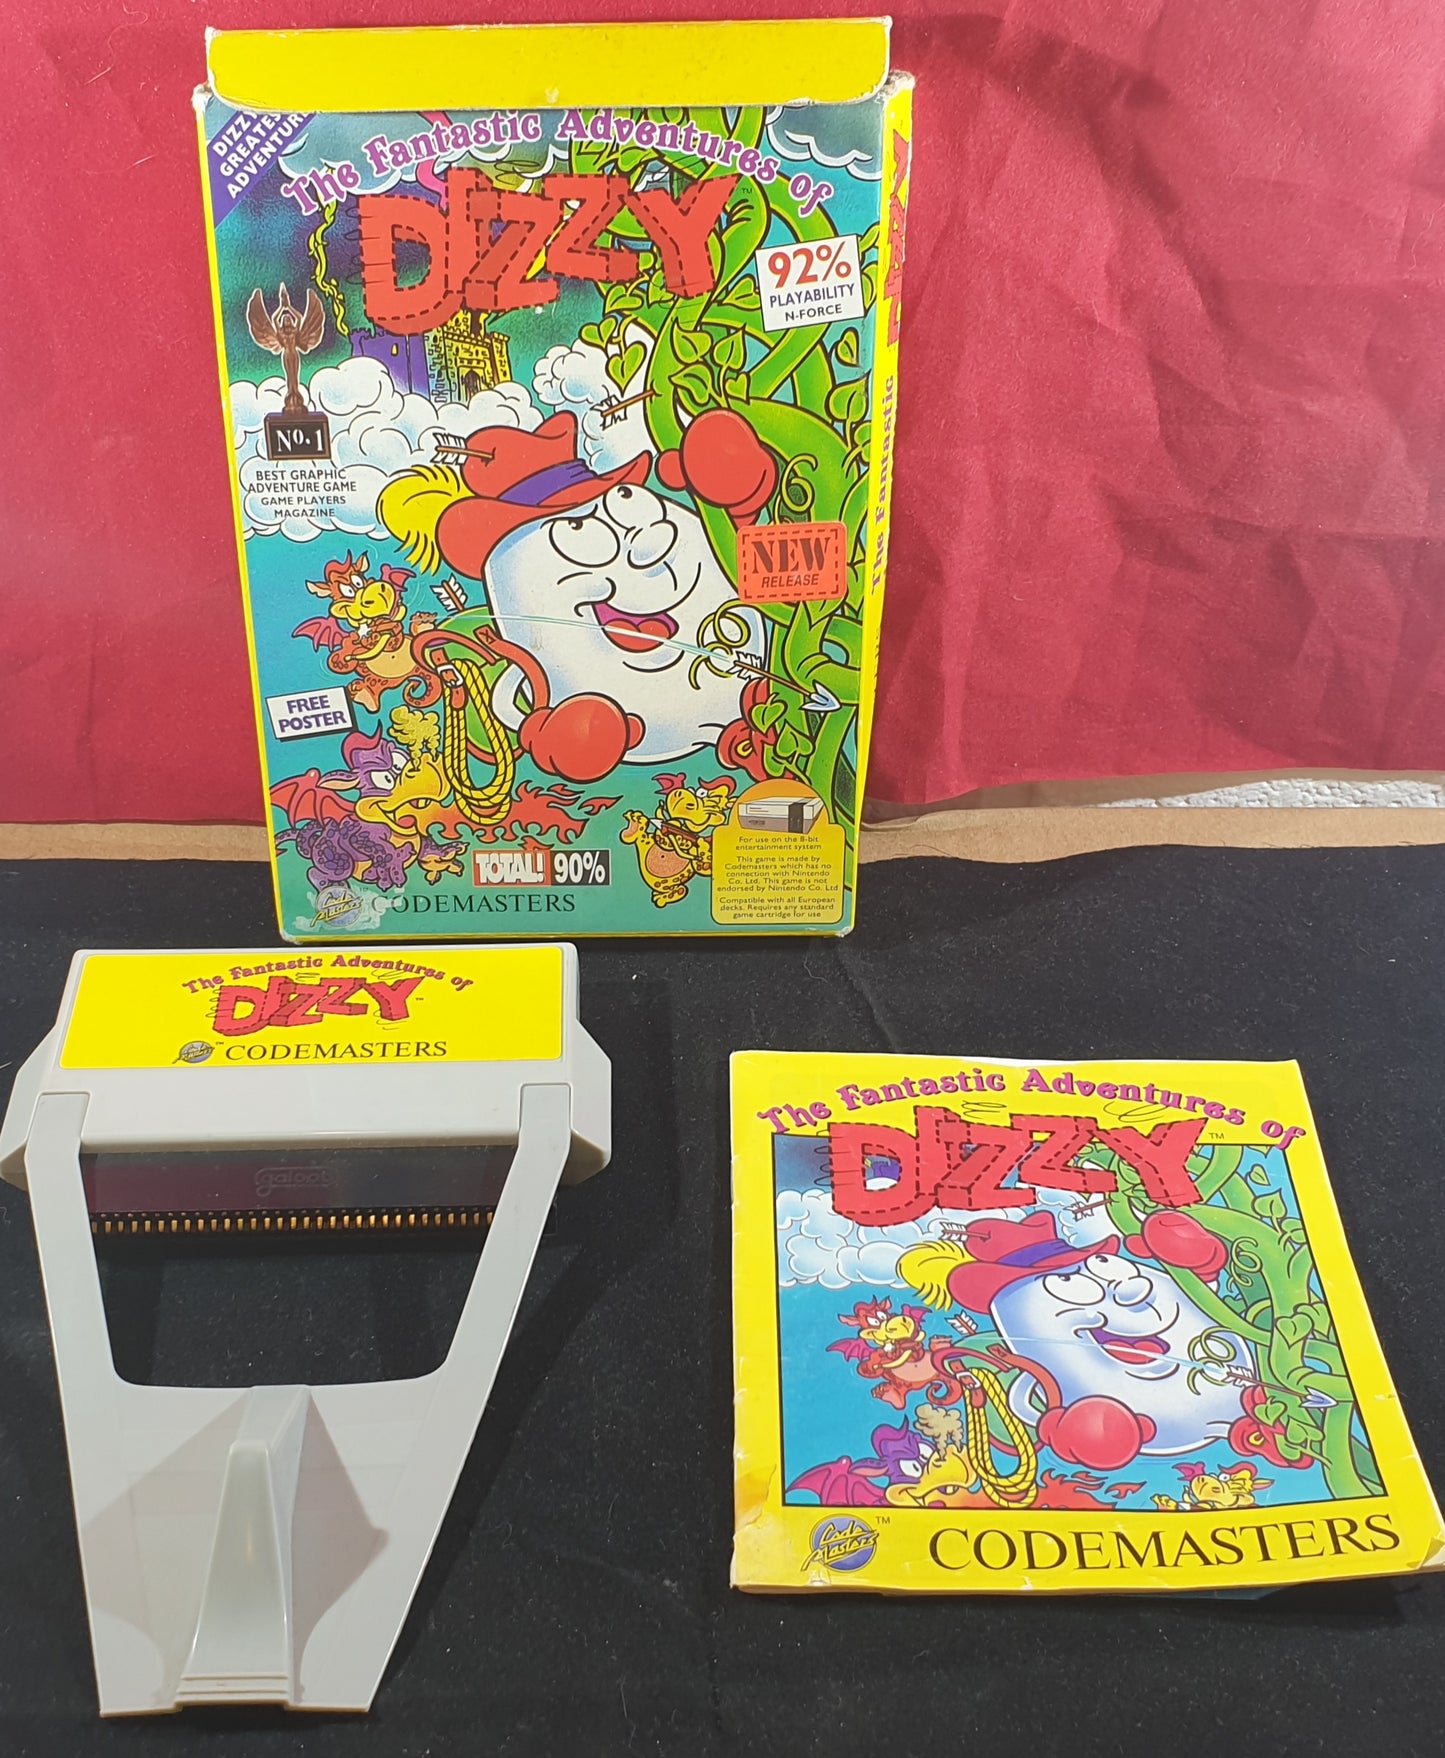 The Fantastic Adventures of Dizzy Nintendo Entertainment System (NES) Game